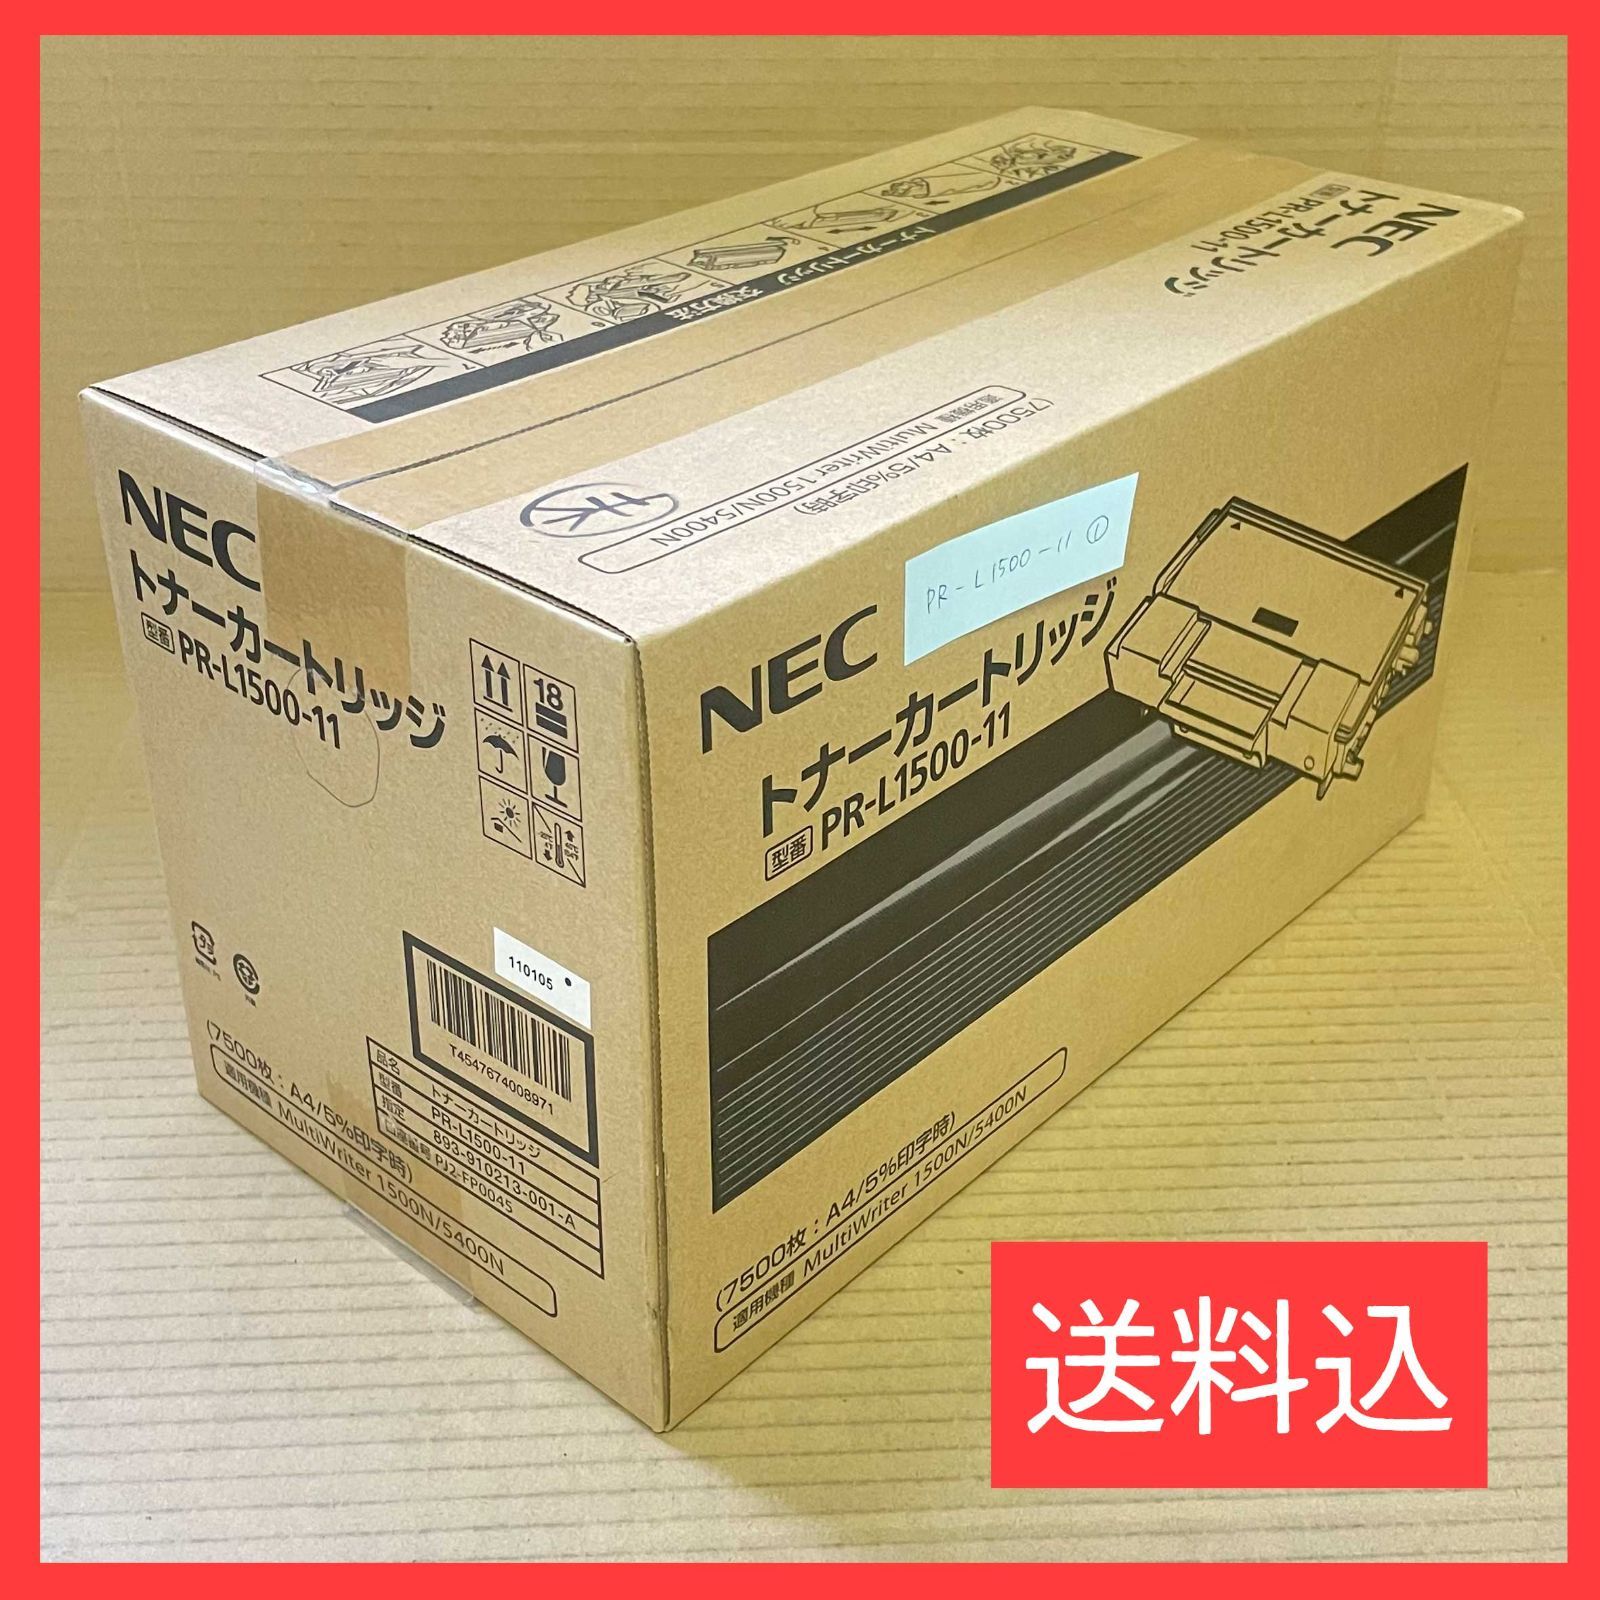 NEC トナーカートリッジ PR-L1500-11 - メルカリ